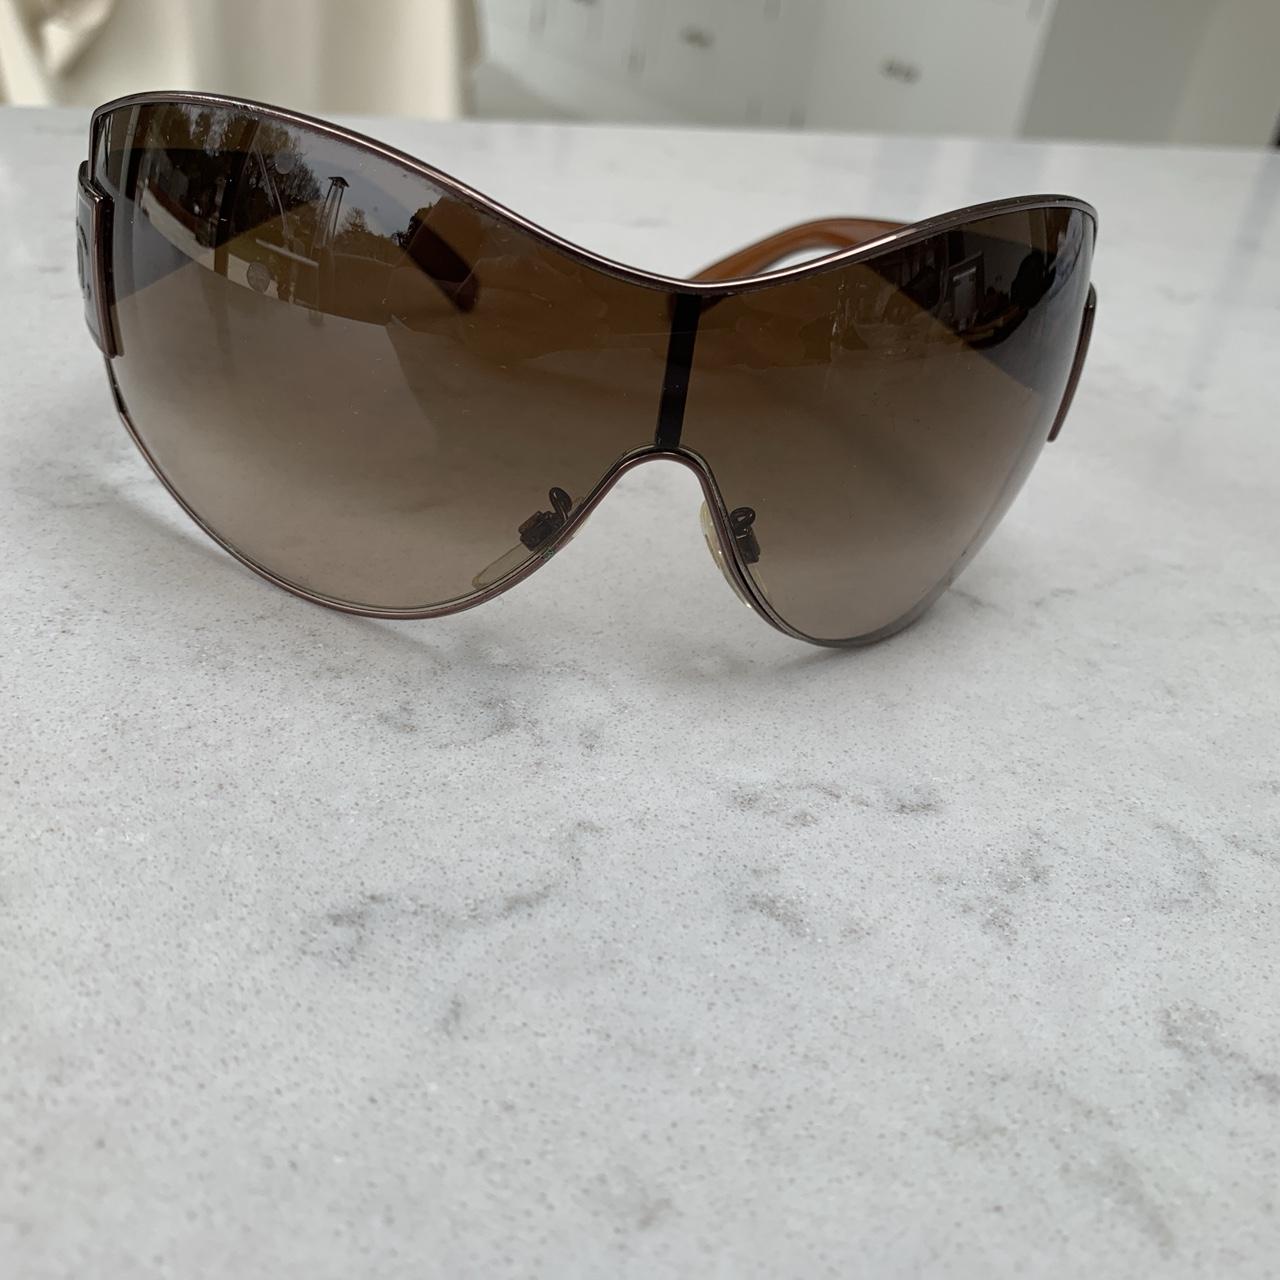 CHANEL Sunglasses Vintage Rare Oval Wrap Halfrim Rimless 4083 